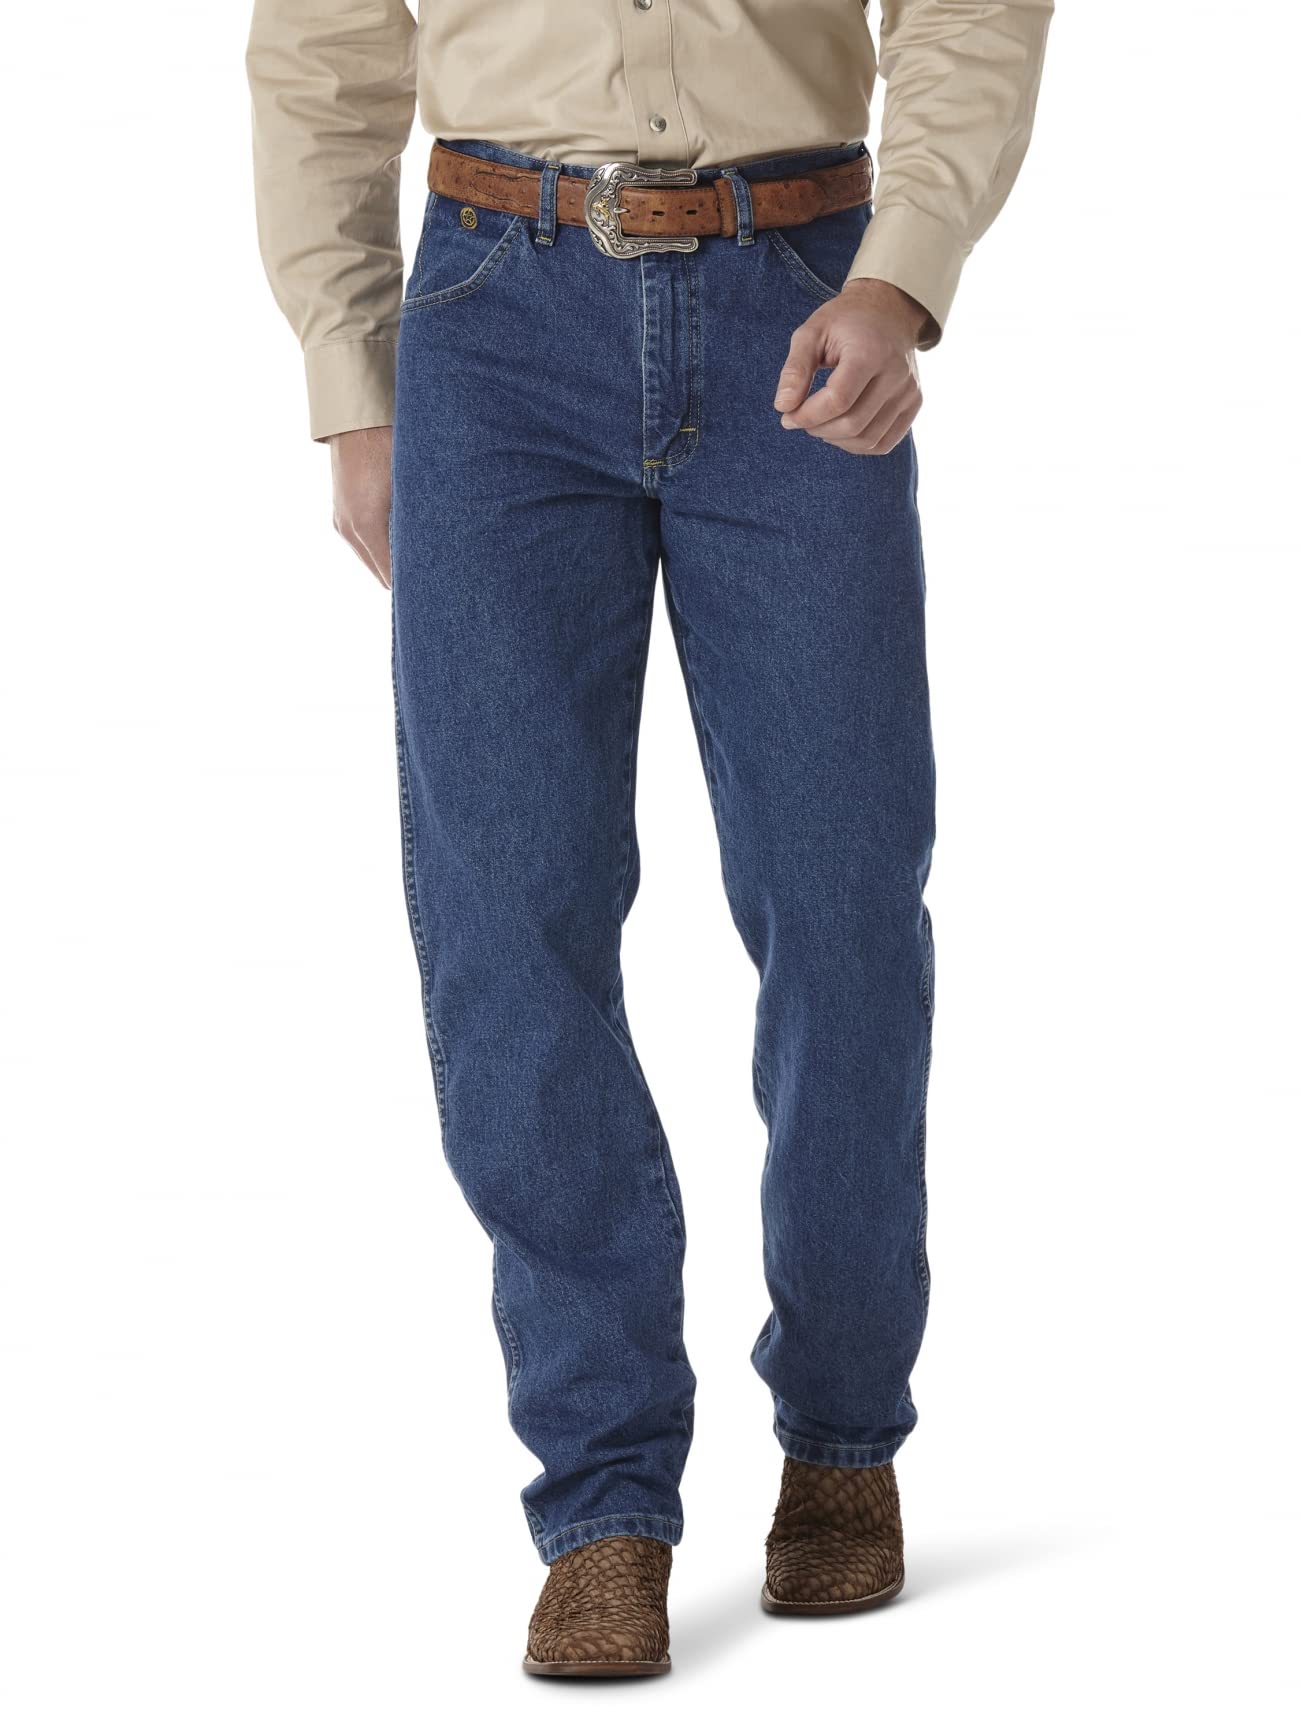 Mua Wrangler Men's George Strait Cowboy Cut Relaxed Fit Jean trên Amazon Mỹ  chính hãng 2023 | Giaonhan247